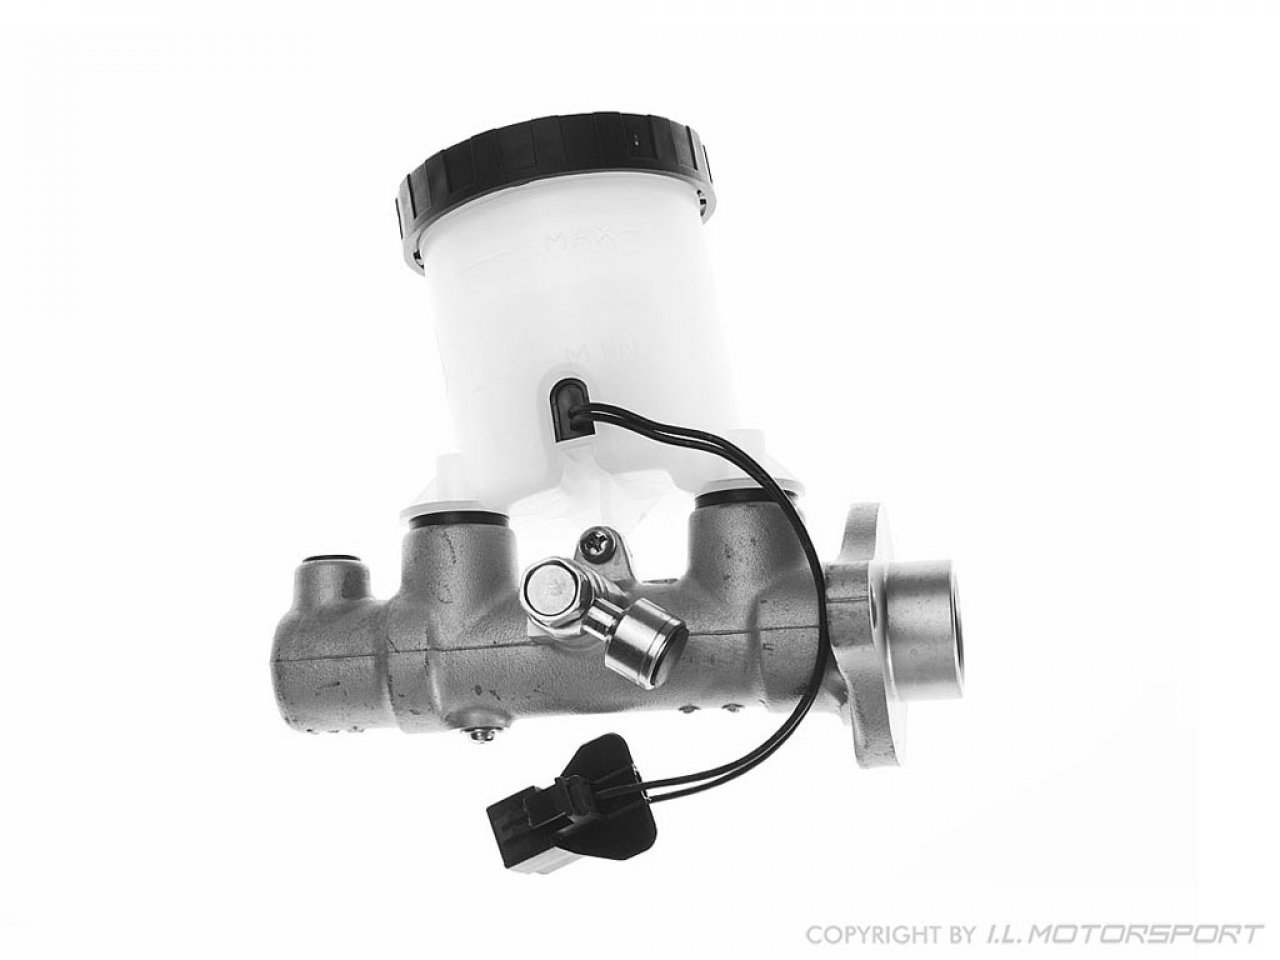 Brake Master Cylinder Repair Kit for Mazda 626 & Demio & MX-6 M1630